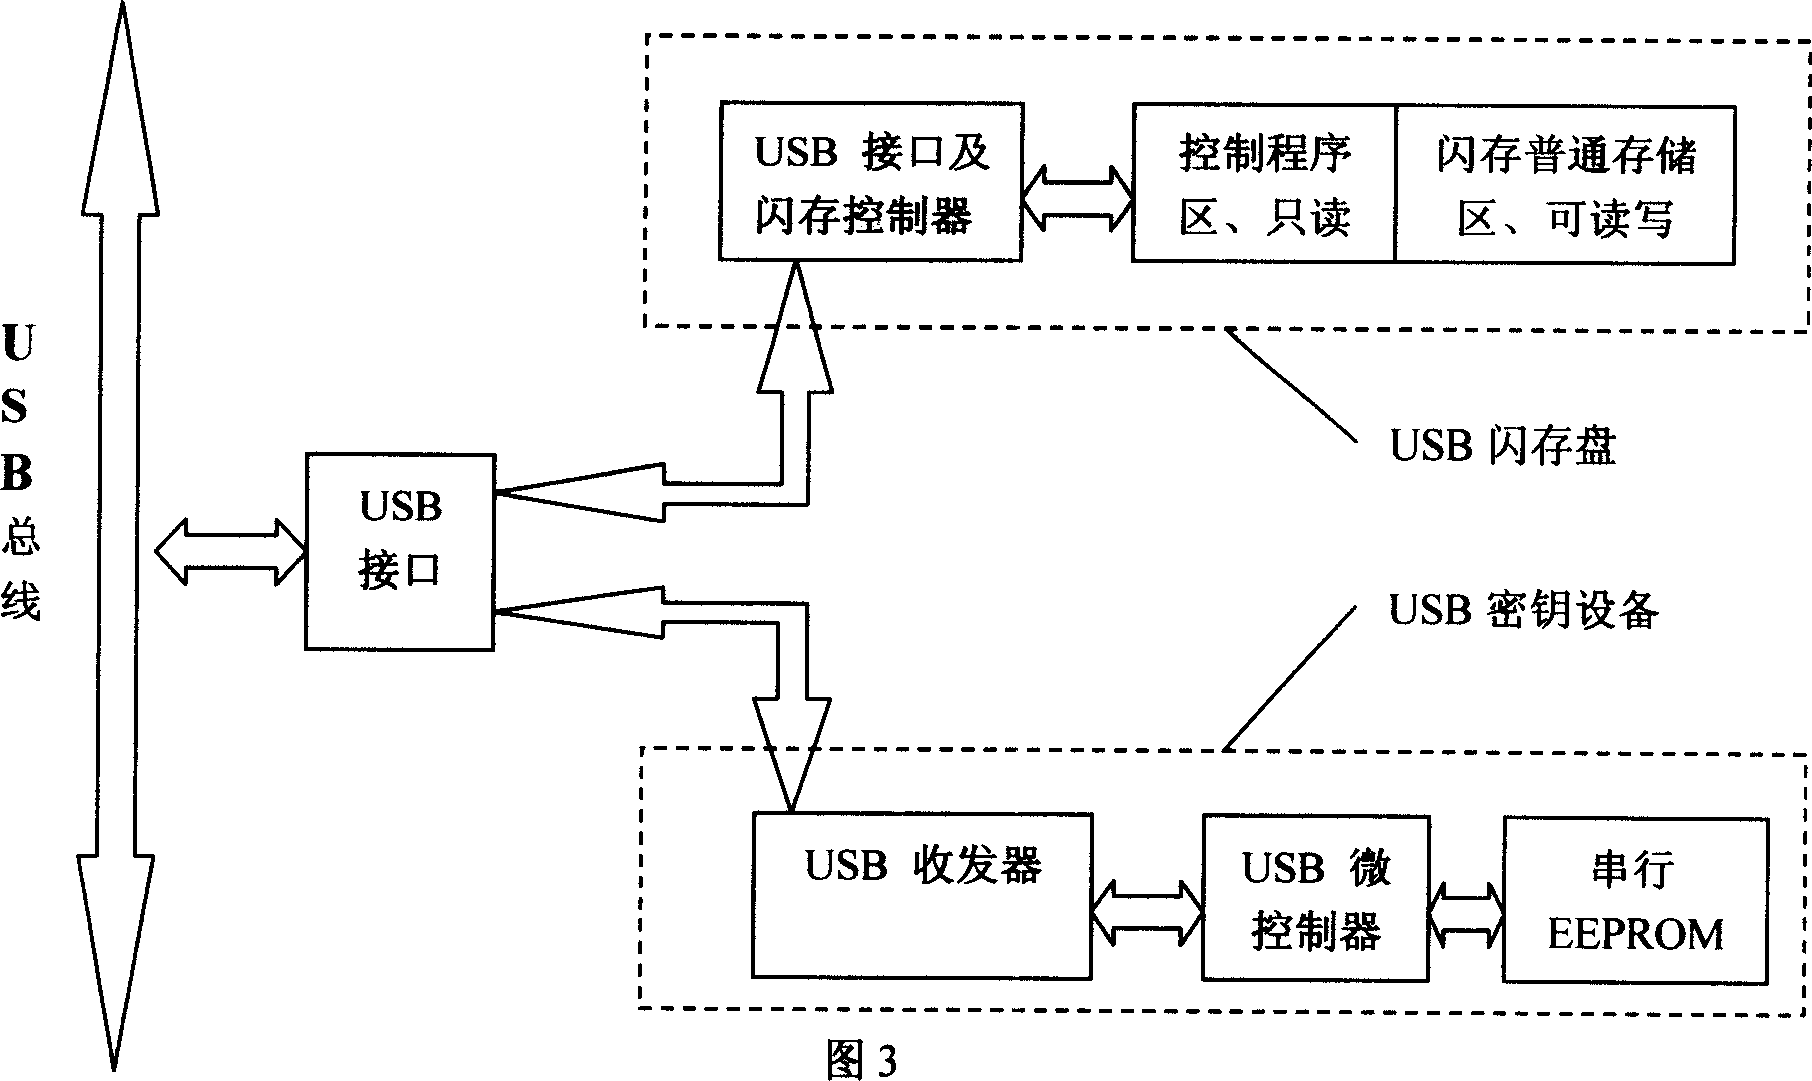 Hand disk locking and de-locking control scheme based on USB key apparatus